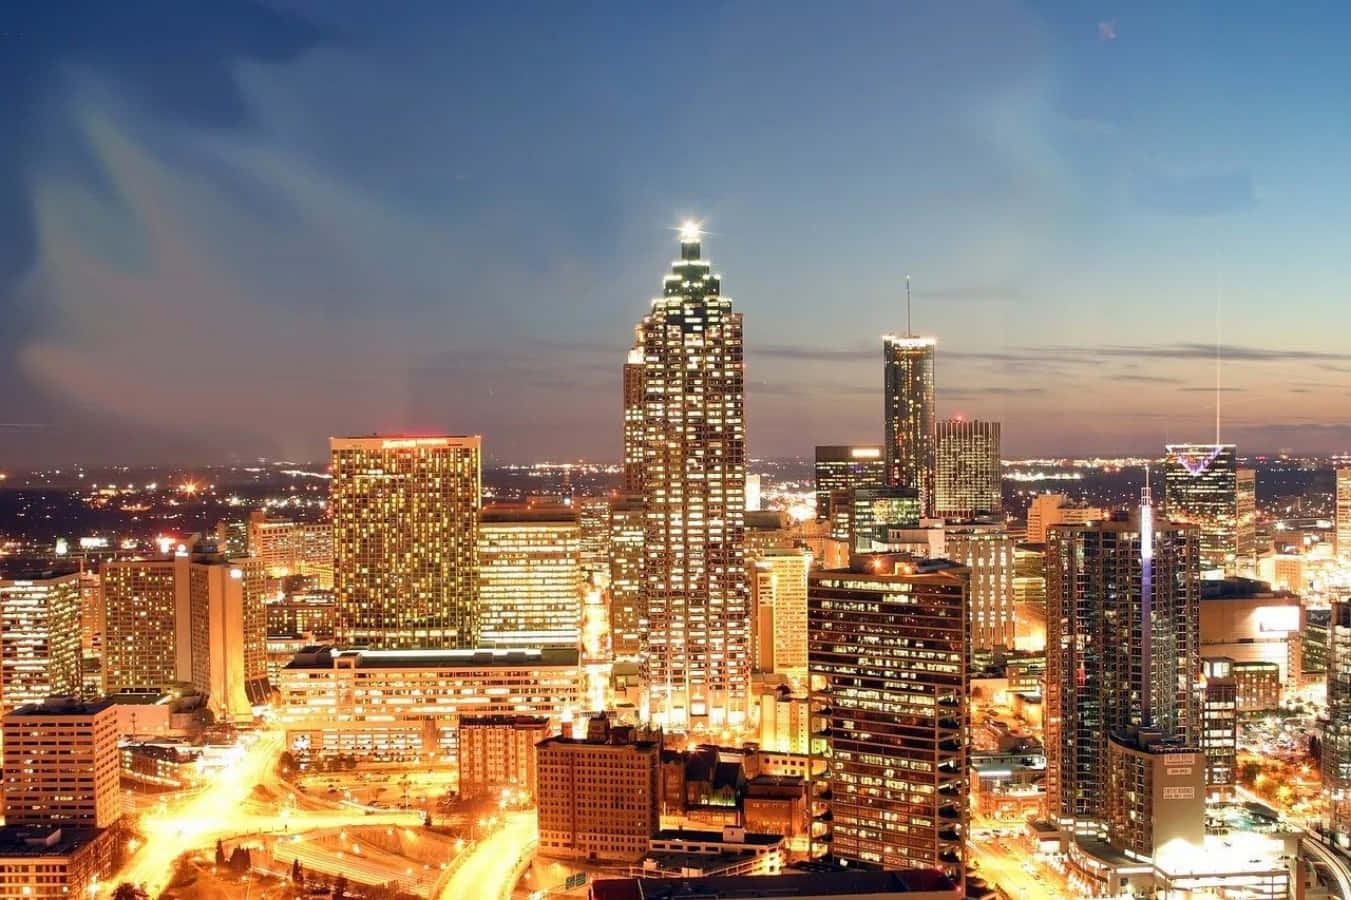 Explore the culture and colors of Atlanta, Georgia